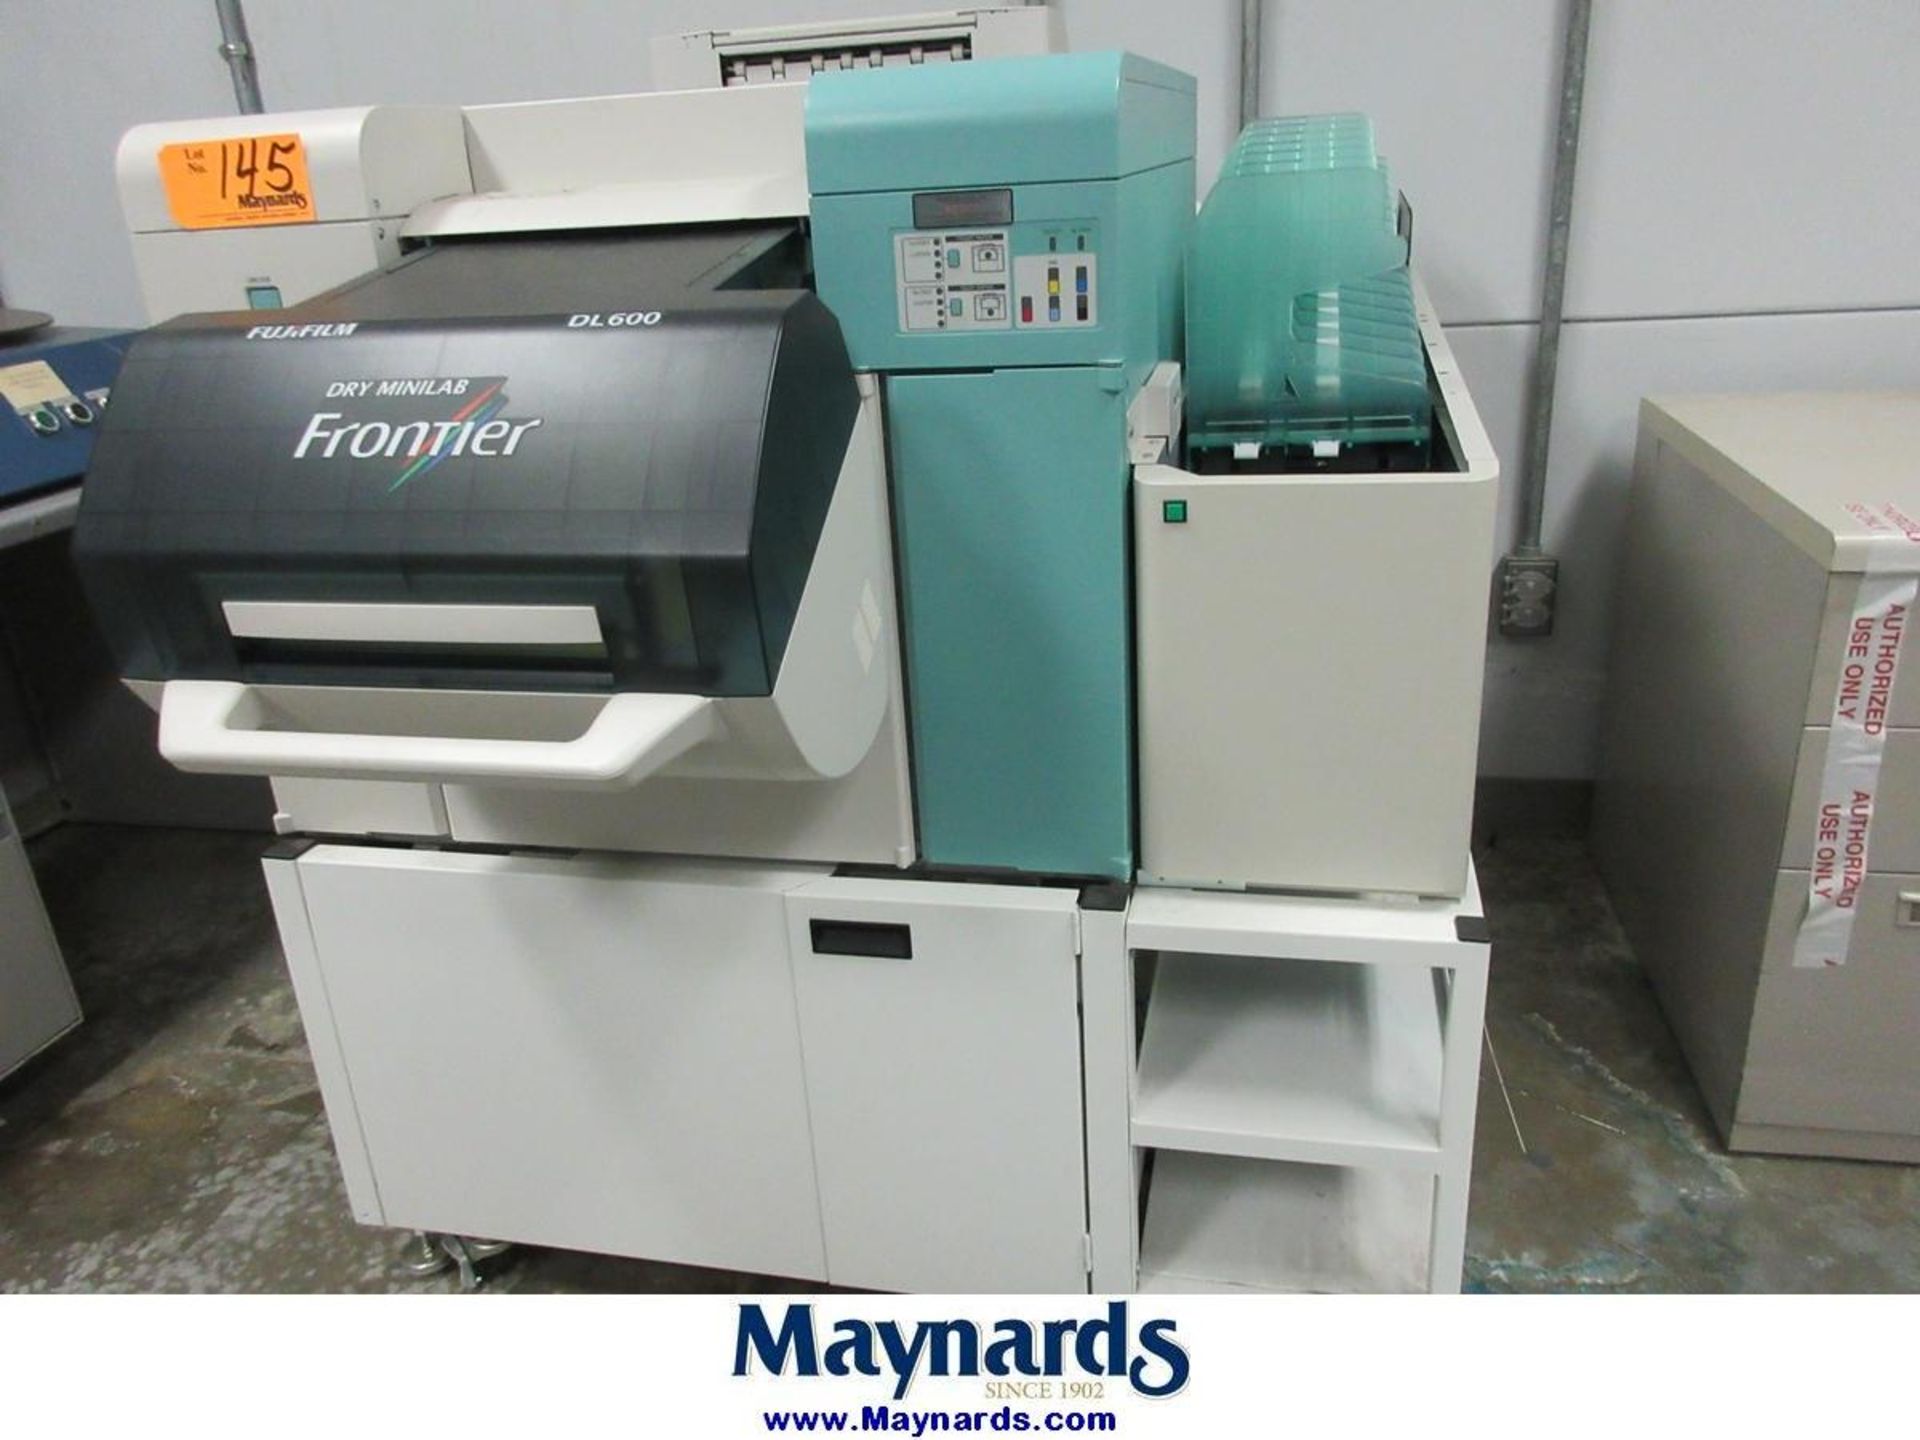 FujiFilm DL600 Dry Minilab Frontier Printer